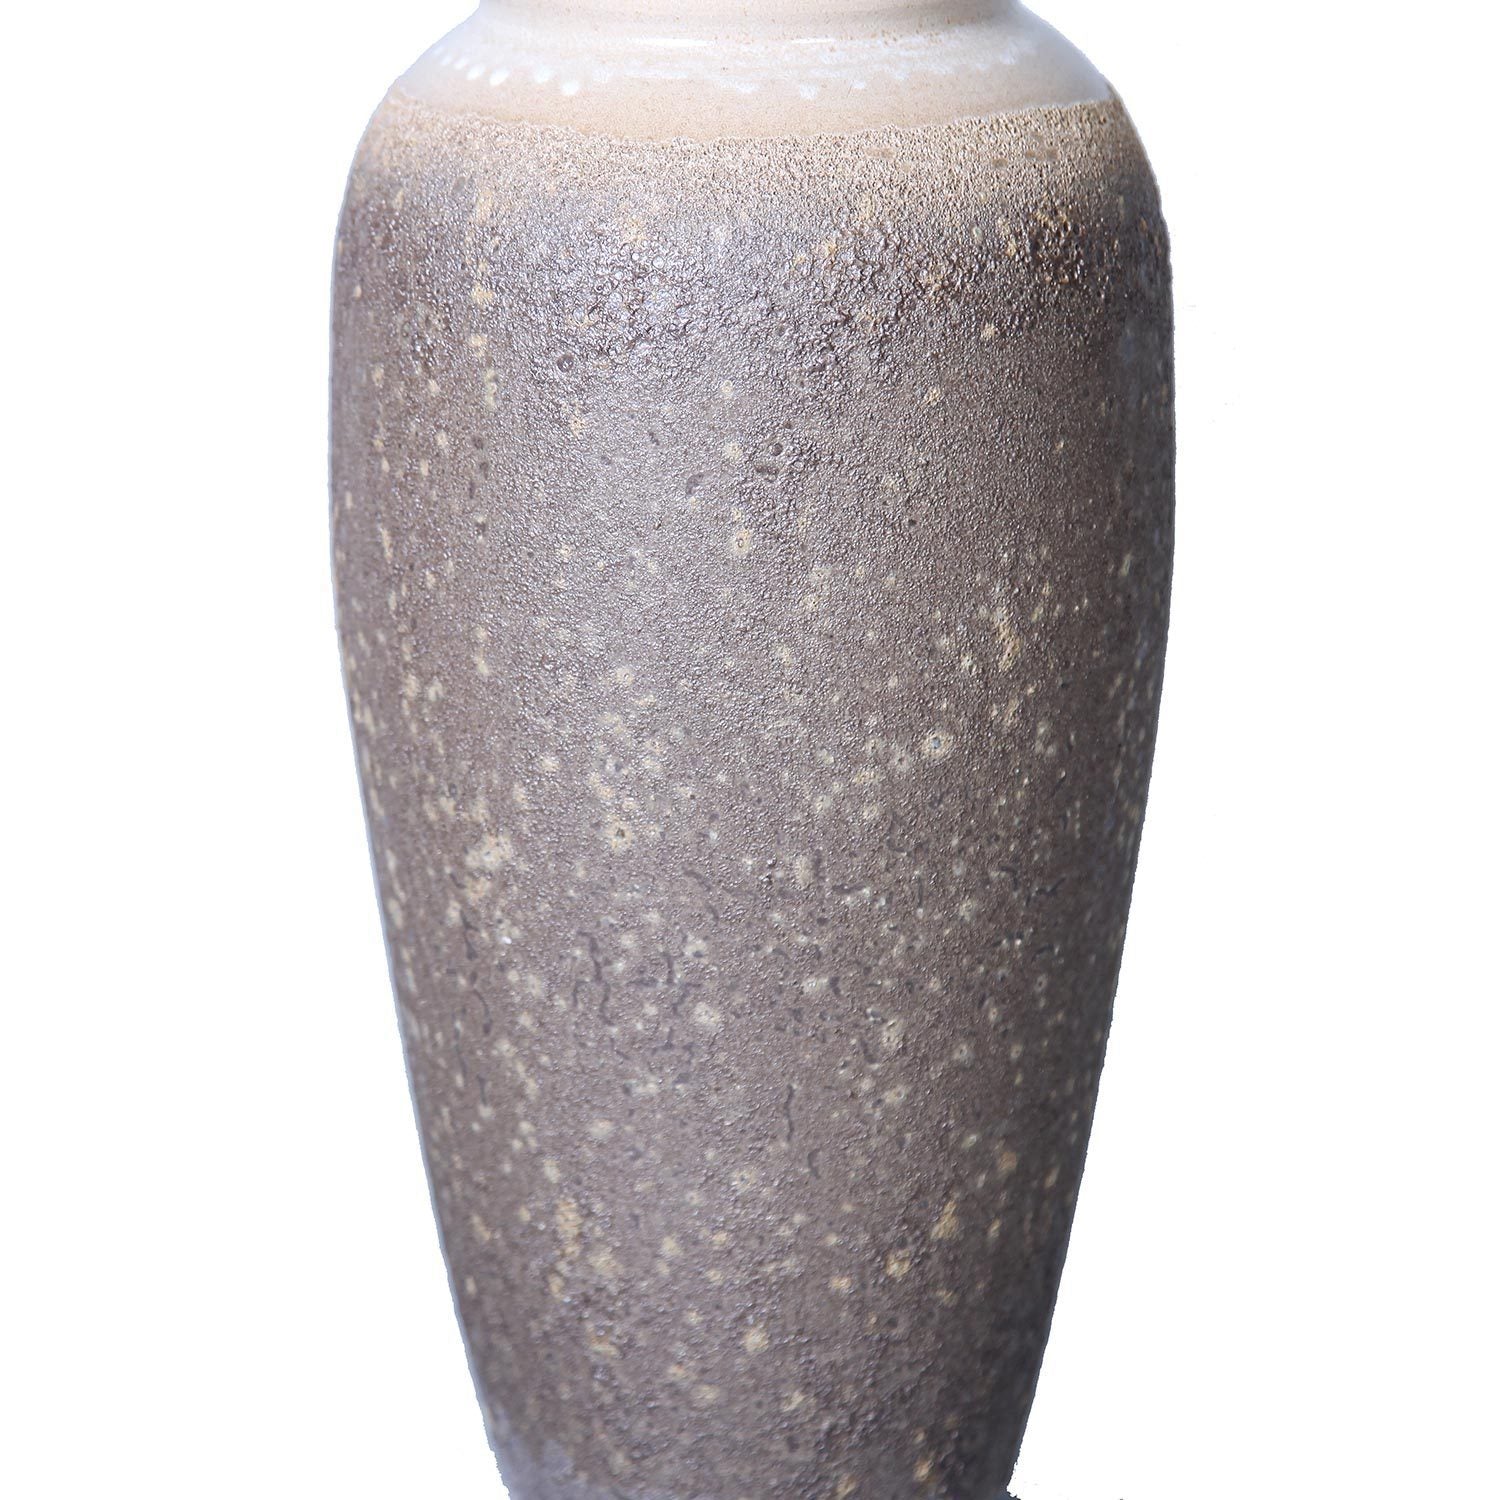 Artisanal Vintage Sand Ceramic Vase 6.5"D x 13.5"H